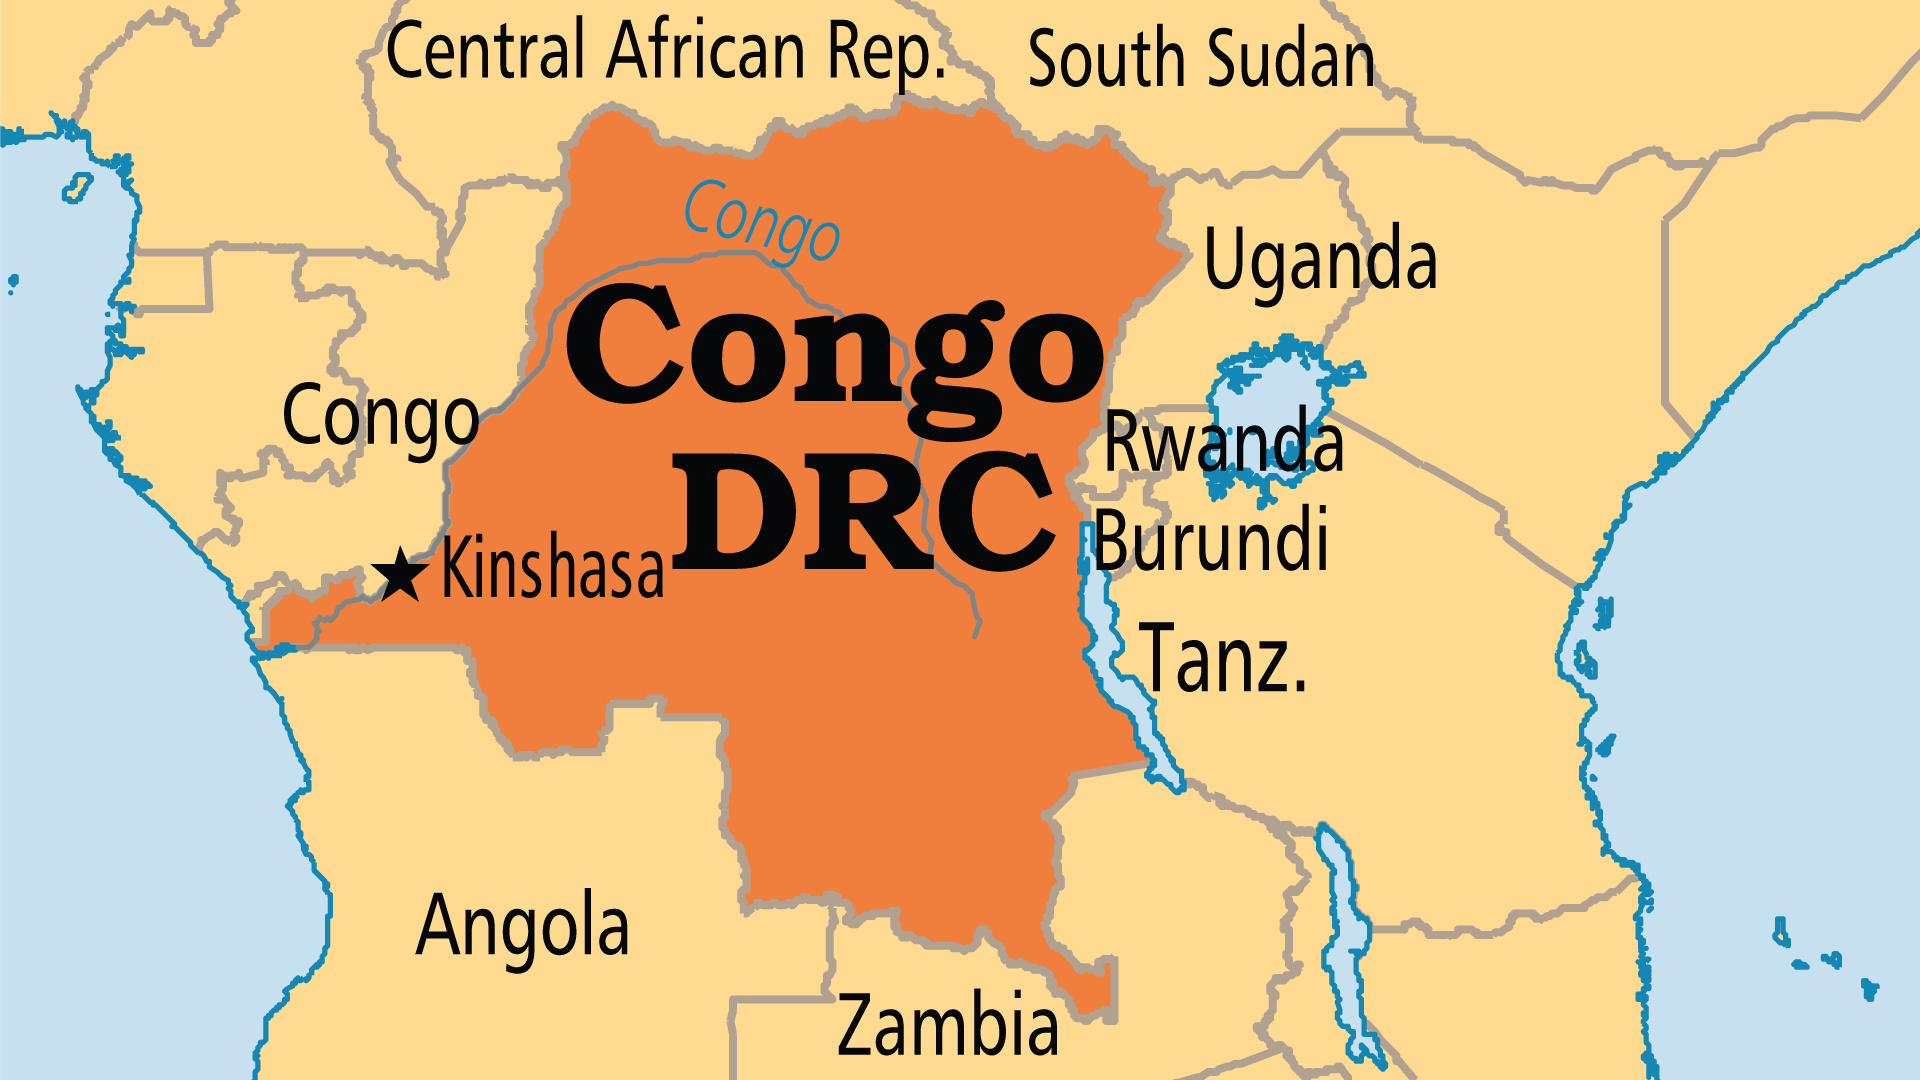 Congolese travels, Operation World, Democratic Republic, Congo, 1920x1080 Full HD Desktop